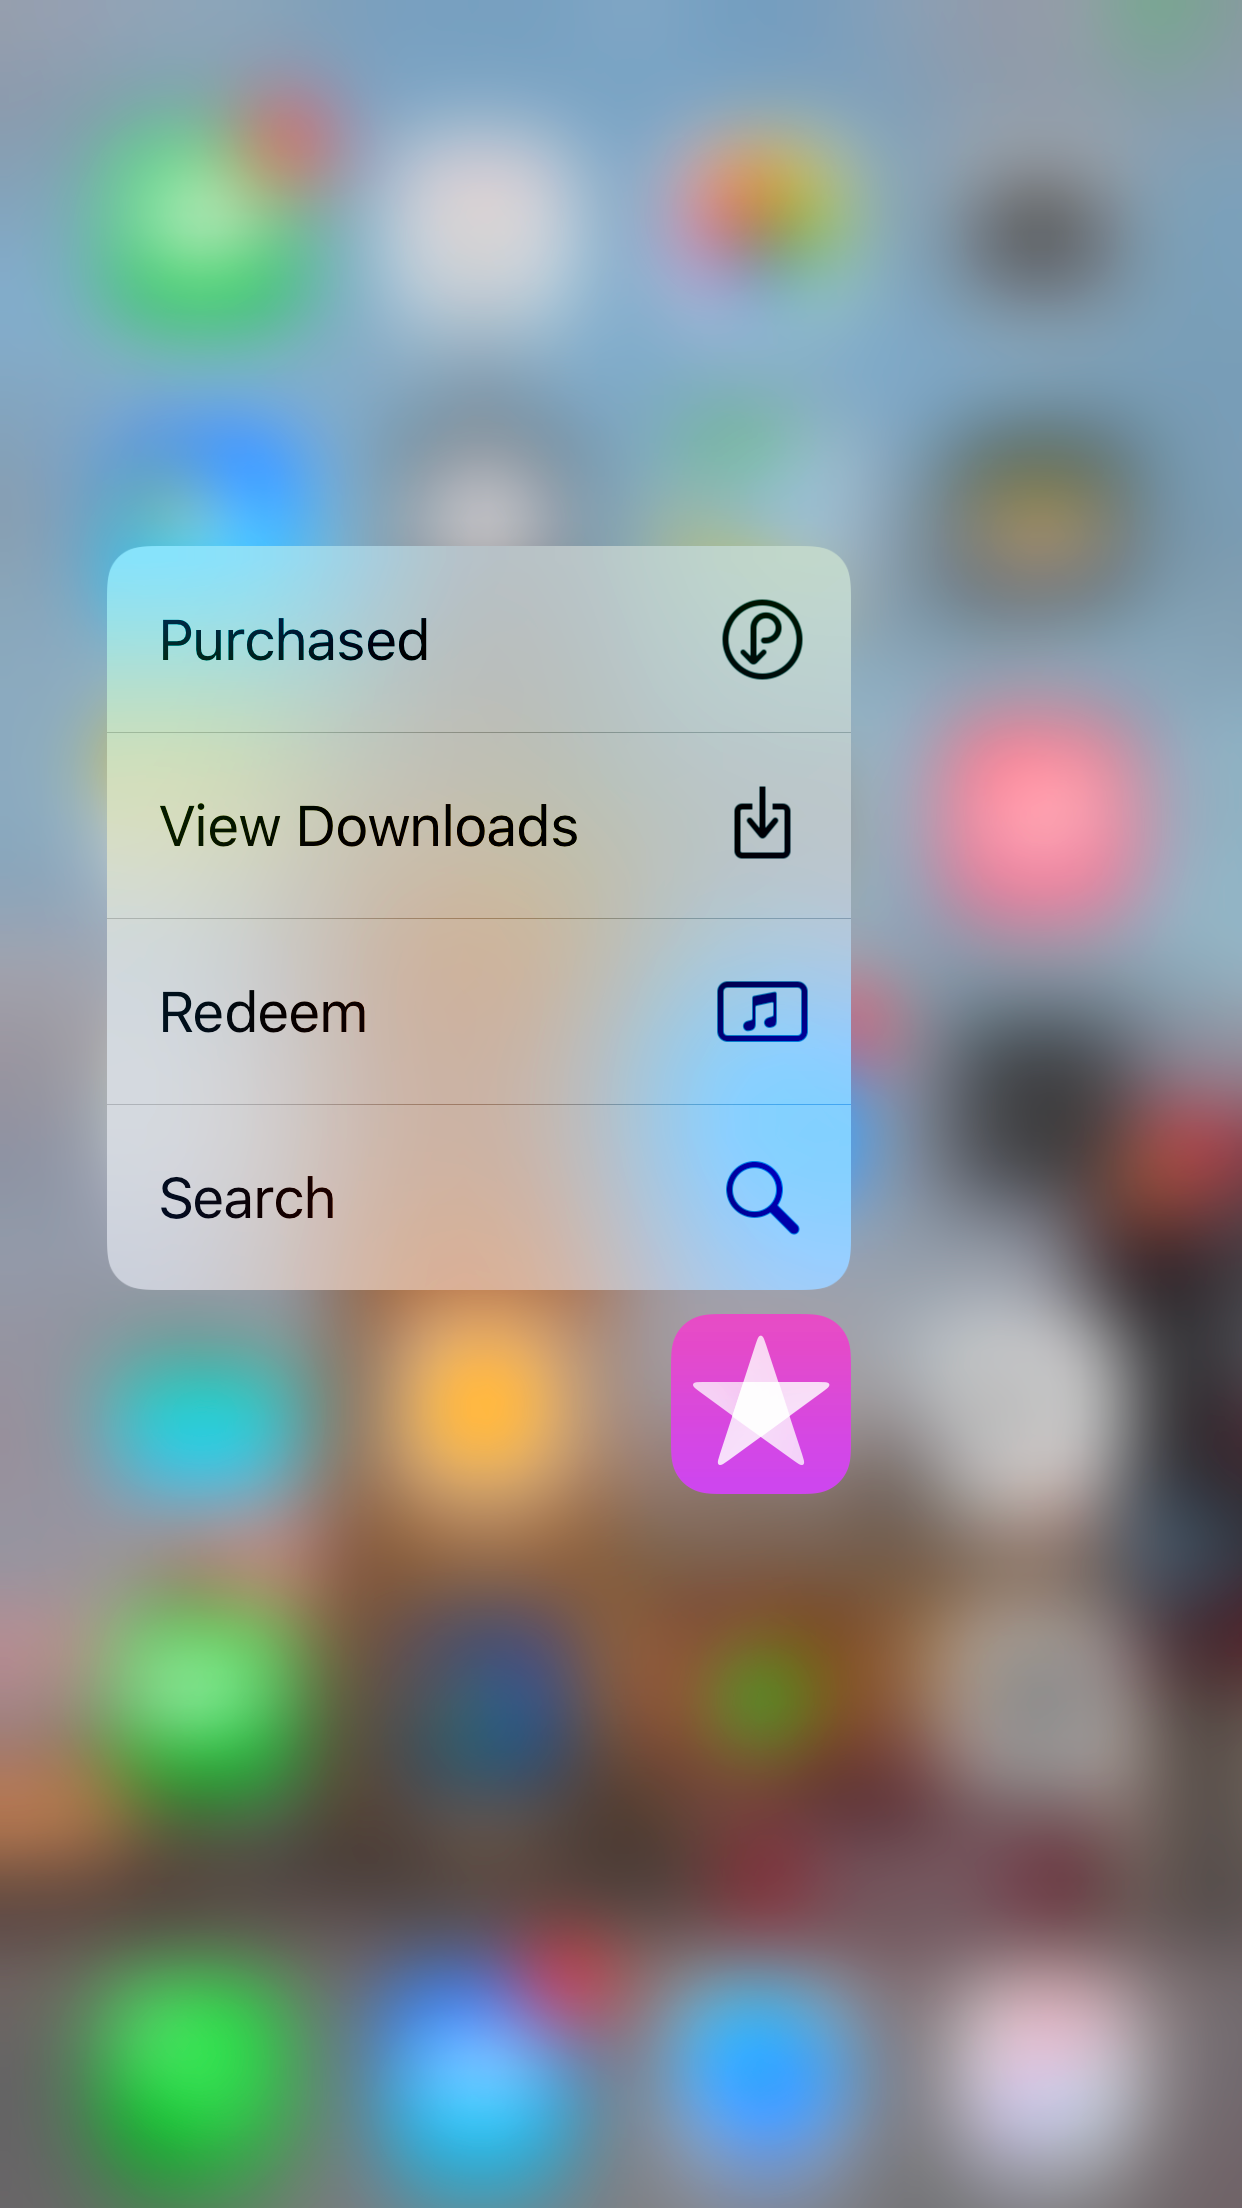 Screenshots do iOS 11 beta